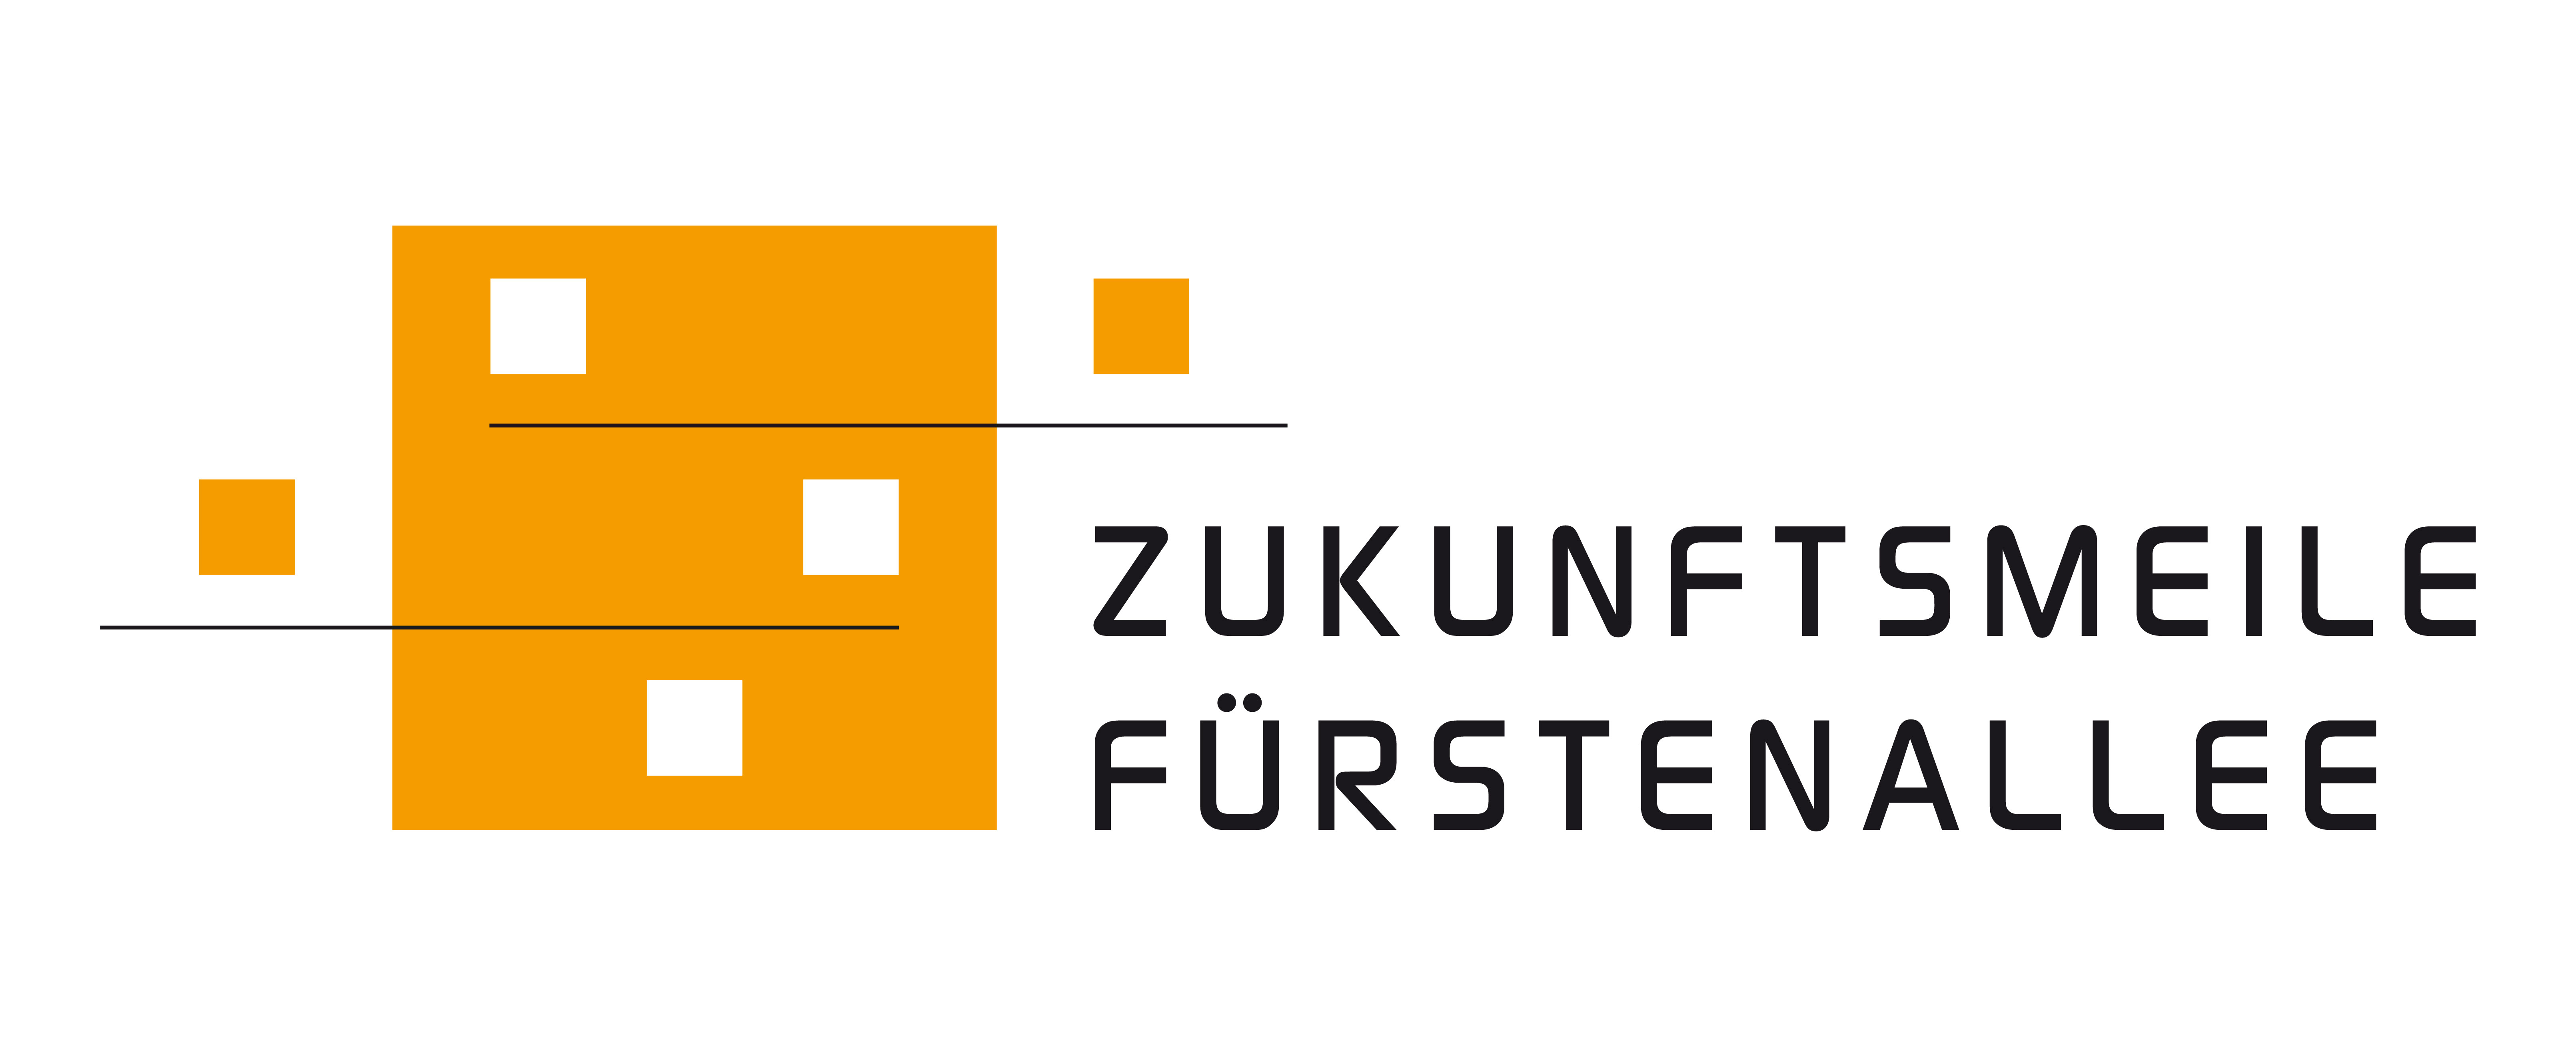 Zukunftsmeile Logo